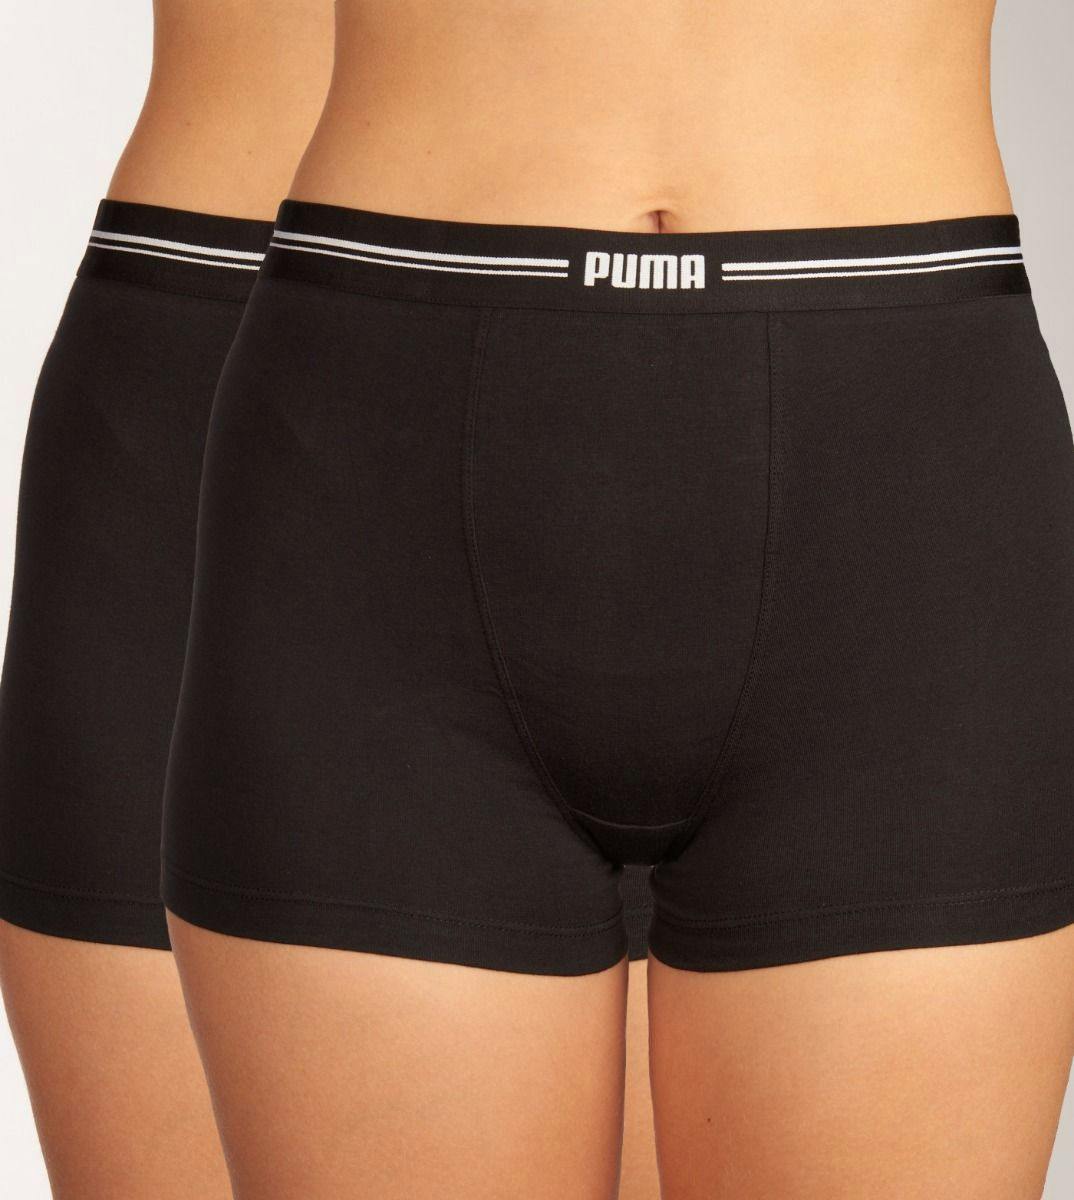 Puma short 2 pack Shorts D